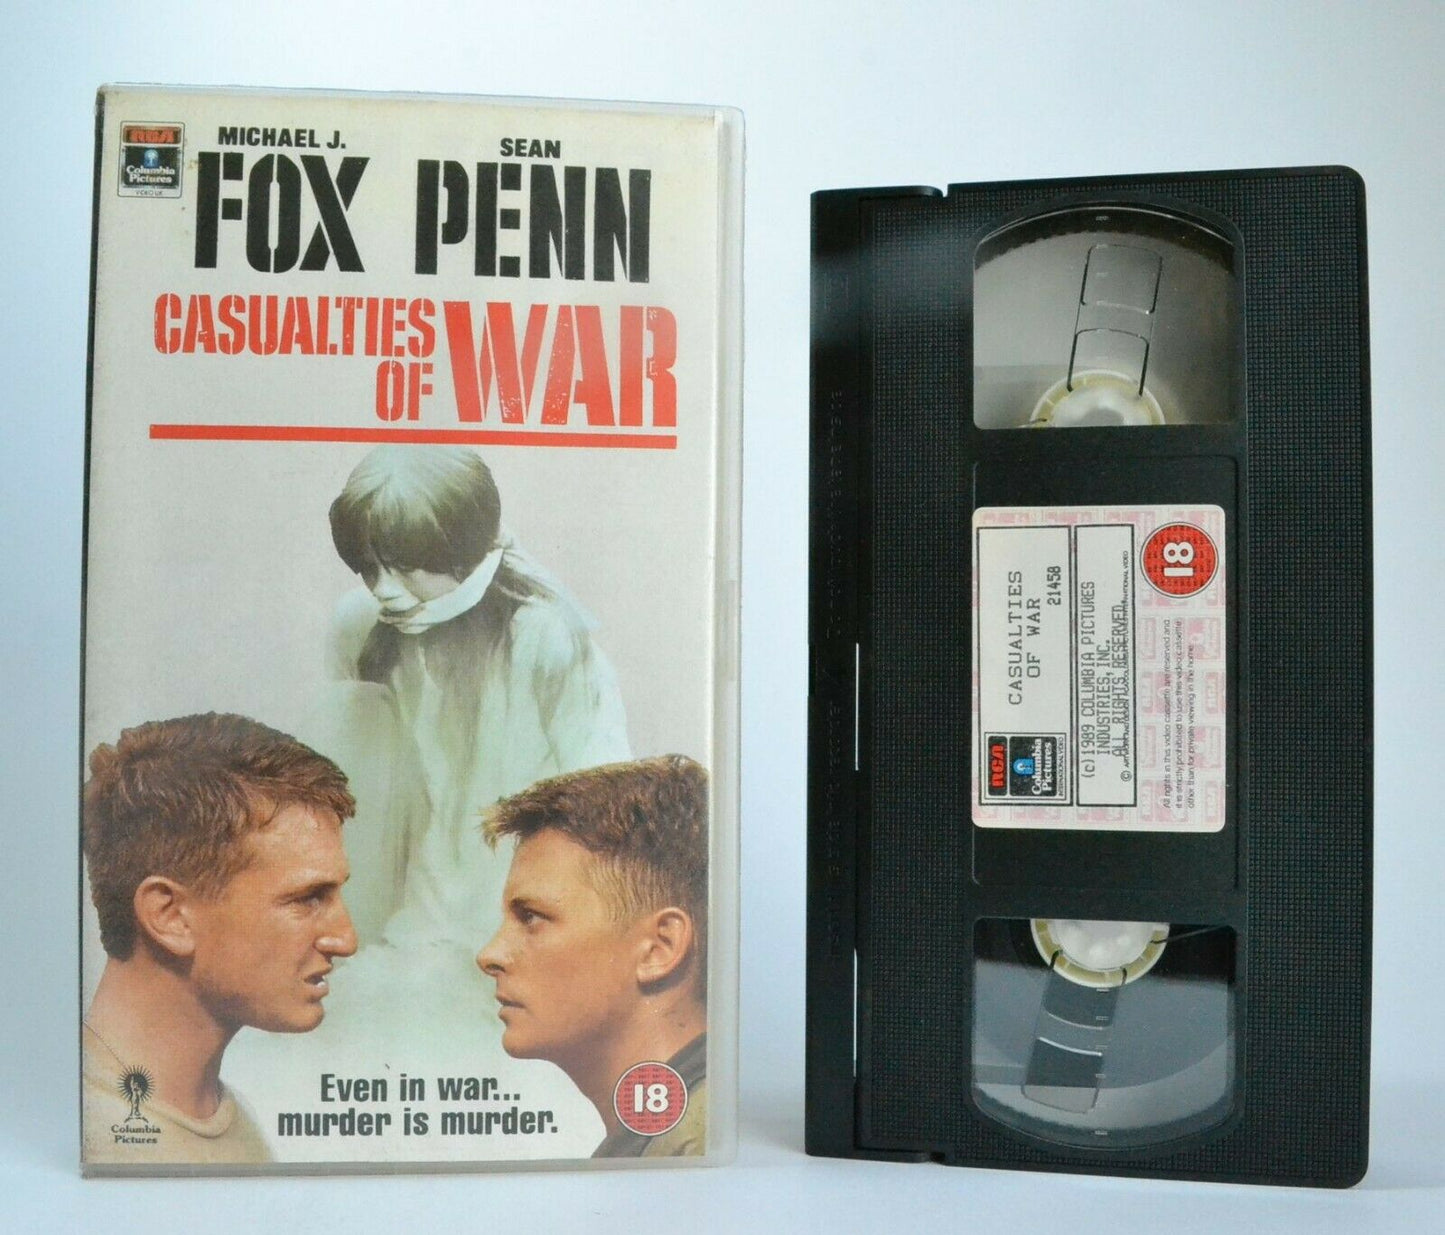 Casualties Of War (1989): Based On Incident On Hill 192 - War Drama - Sean Penn-